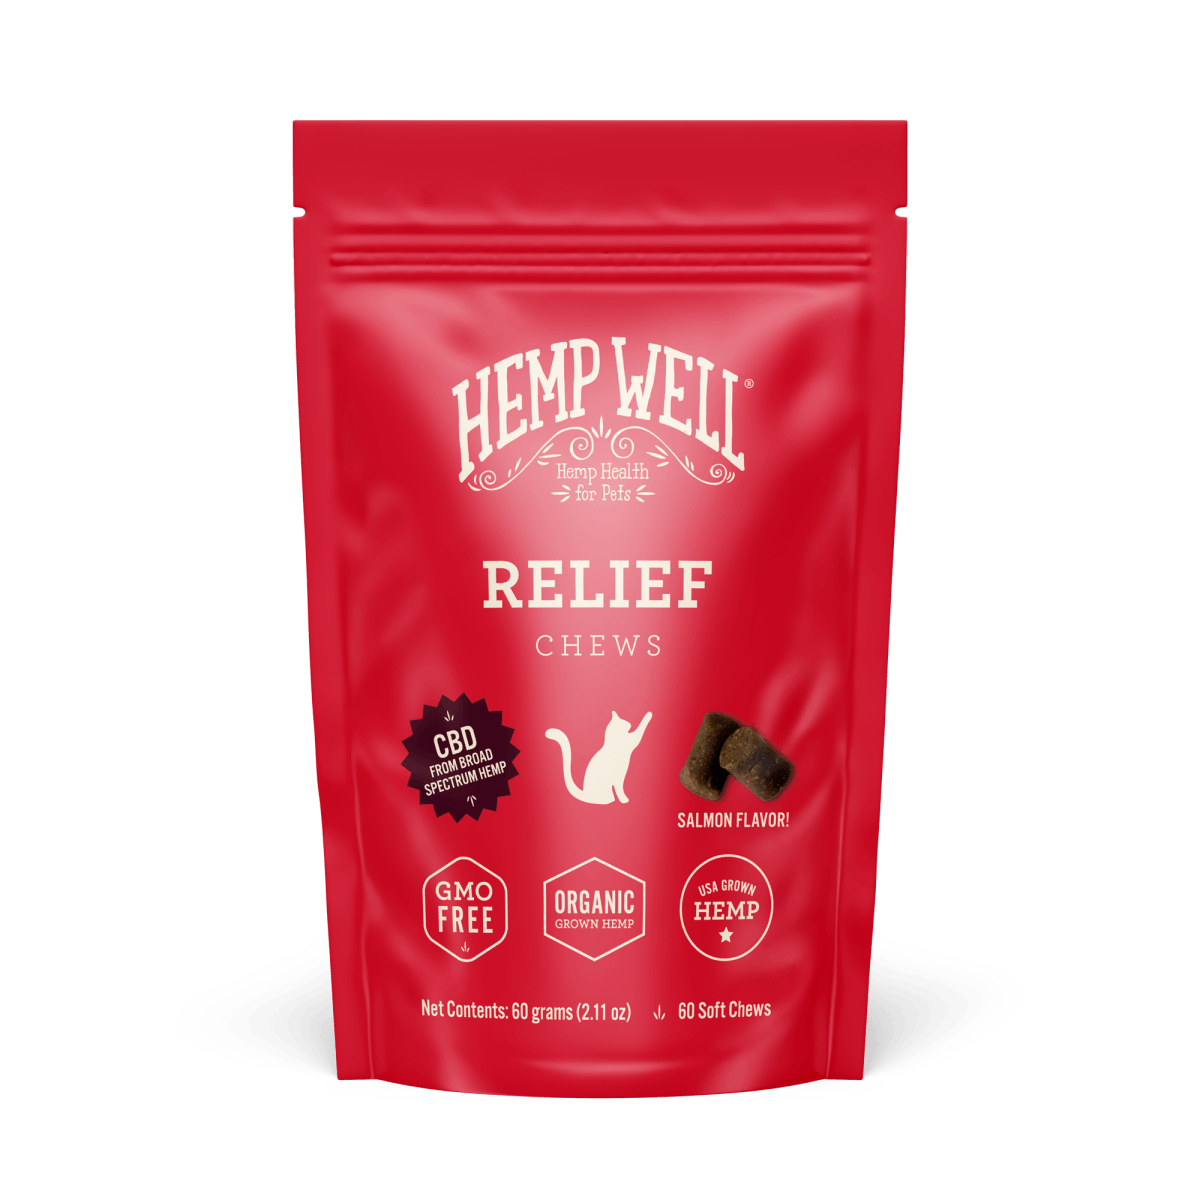 Relief (CBD) Cat Soft Chews - Hemp Well anxiety best CBD cat products calming